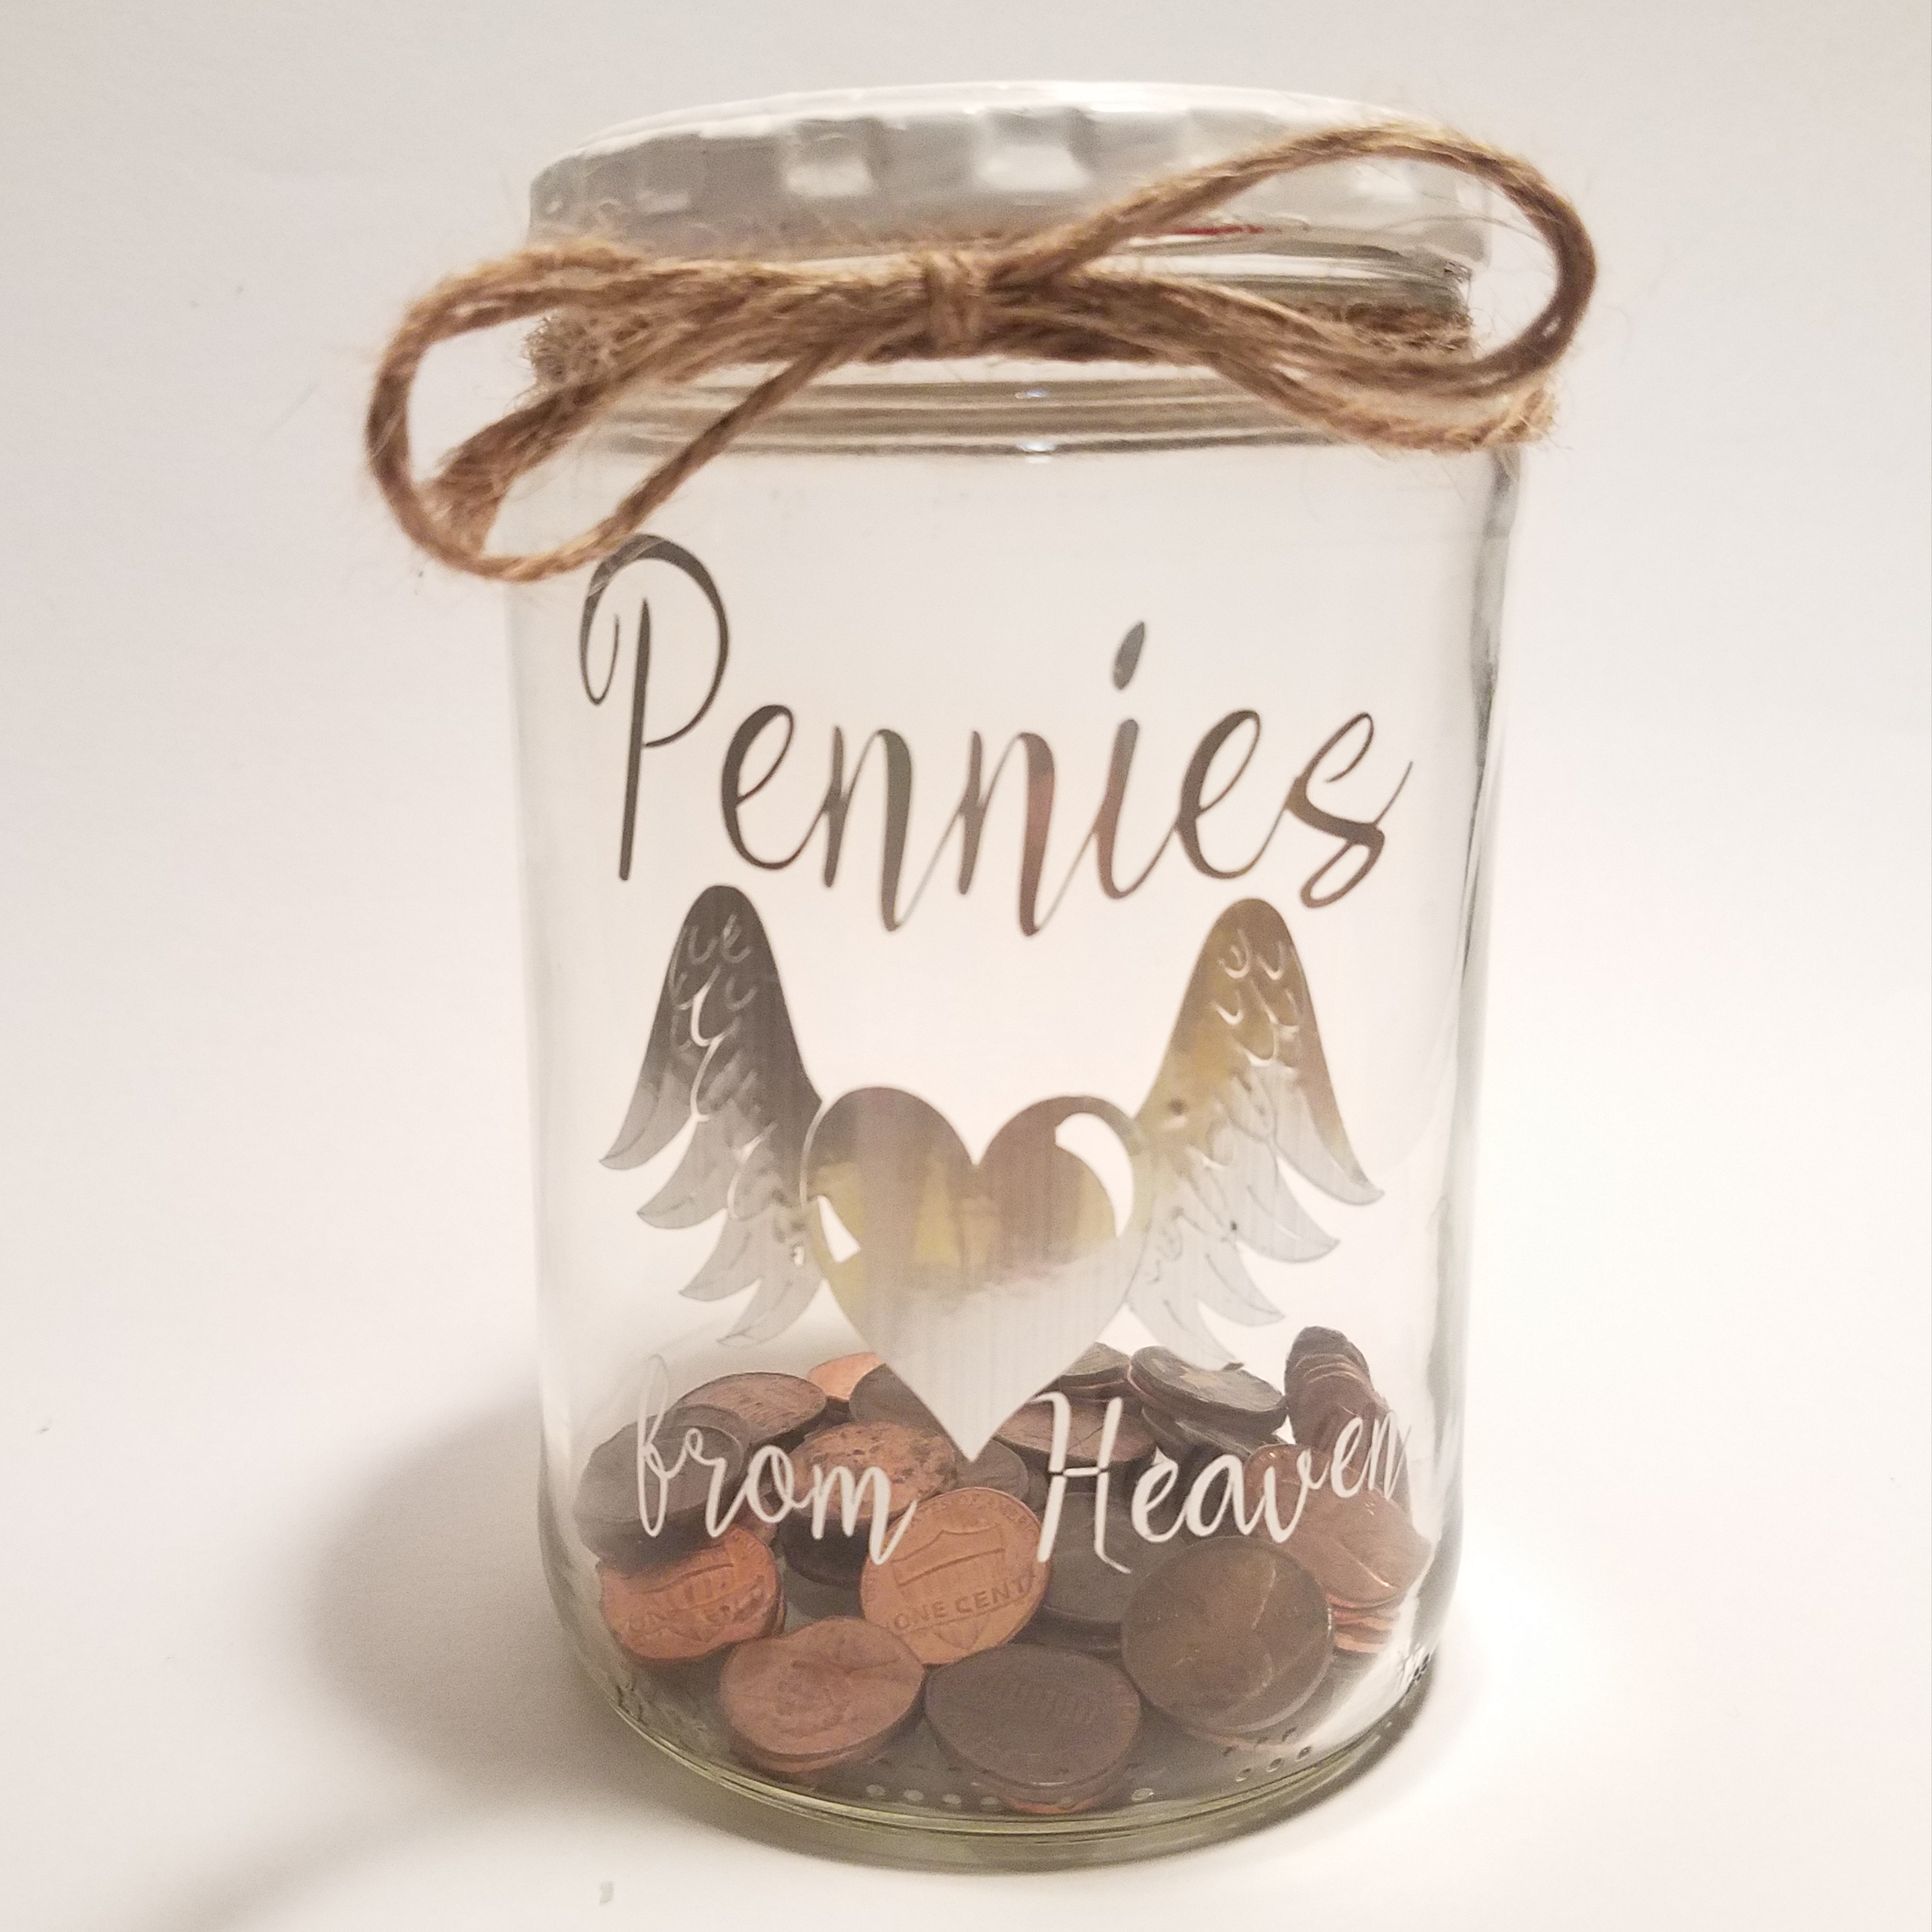 Pennies from Heaven Jar